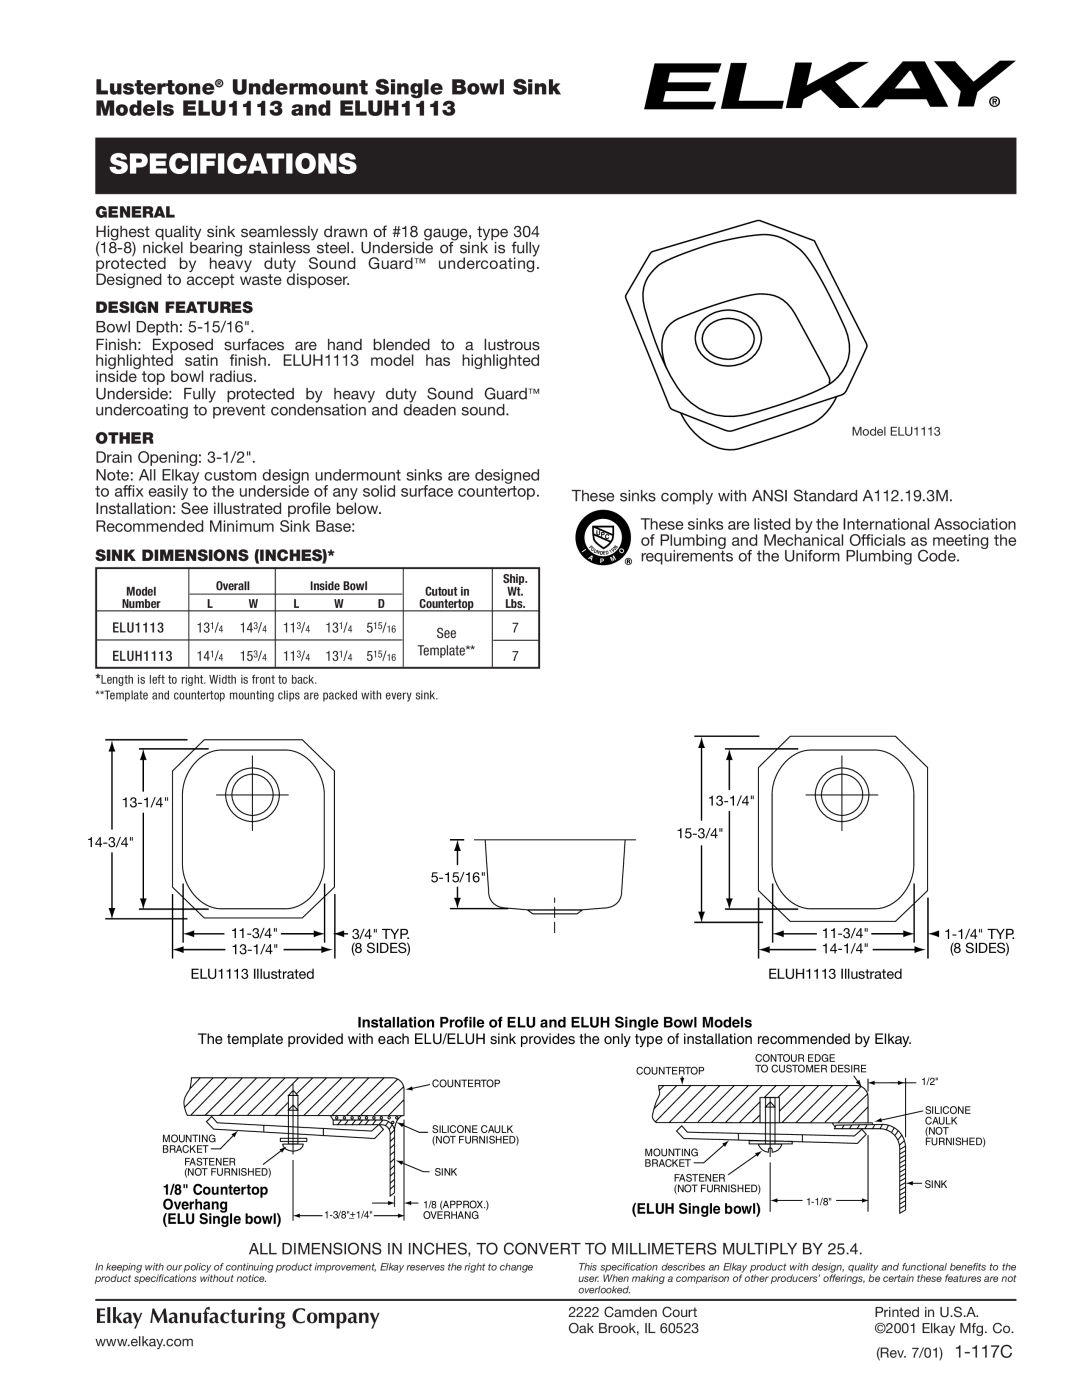 Elkay specifications Specifications, Lustertone Undermount Single Bowl Sink, Models ELU1113 and ELUH1113, General 